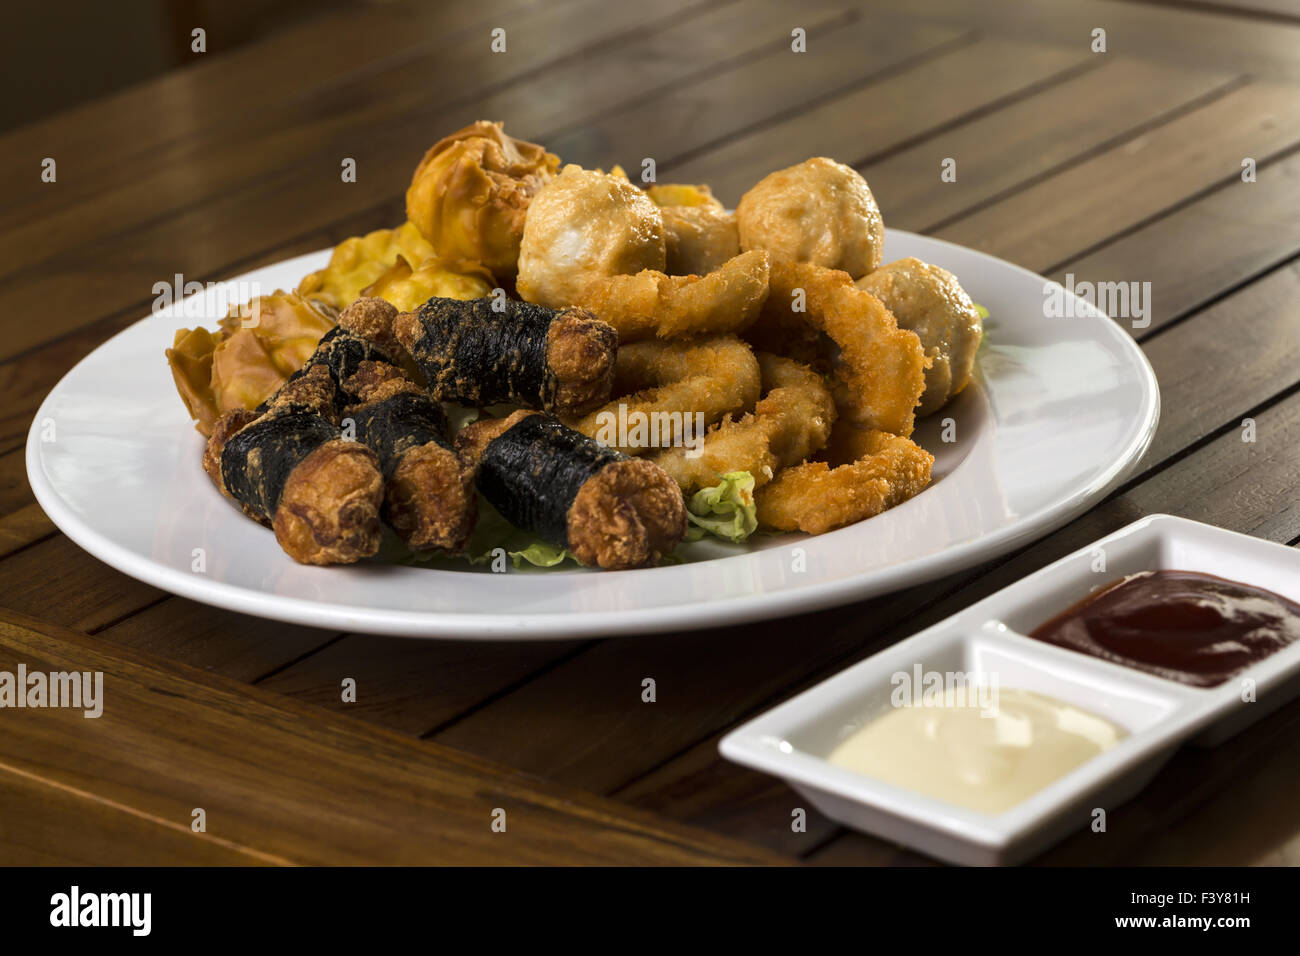 Fried finger food Stock Photo